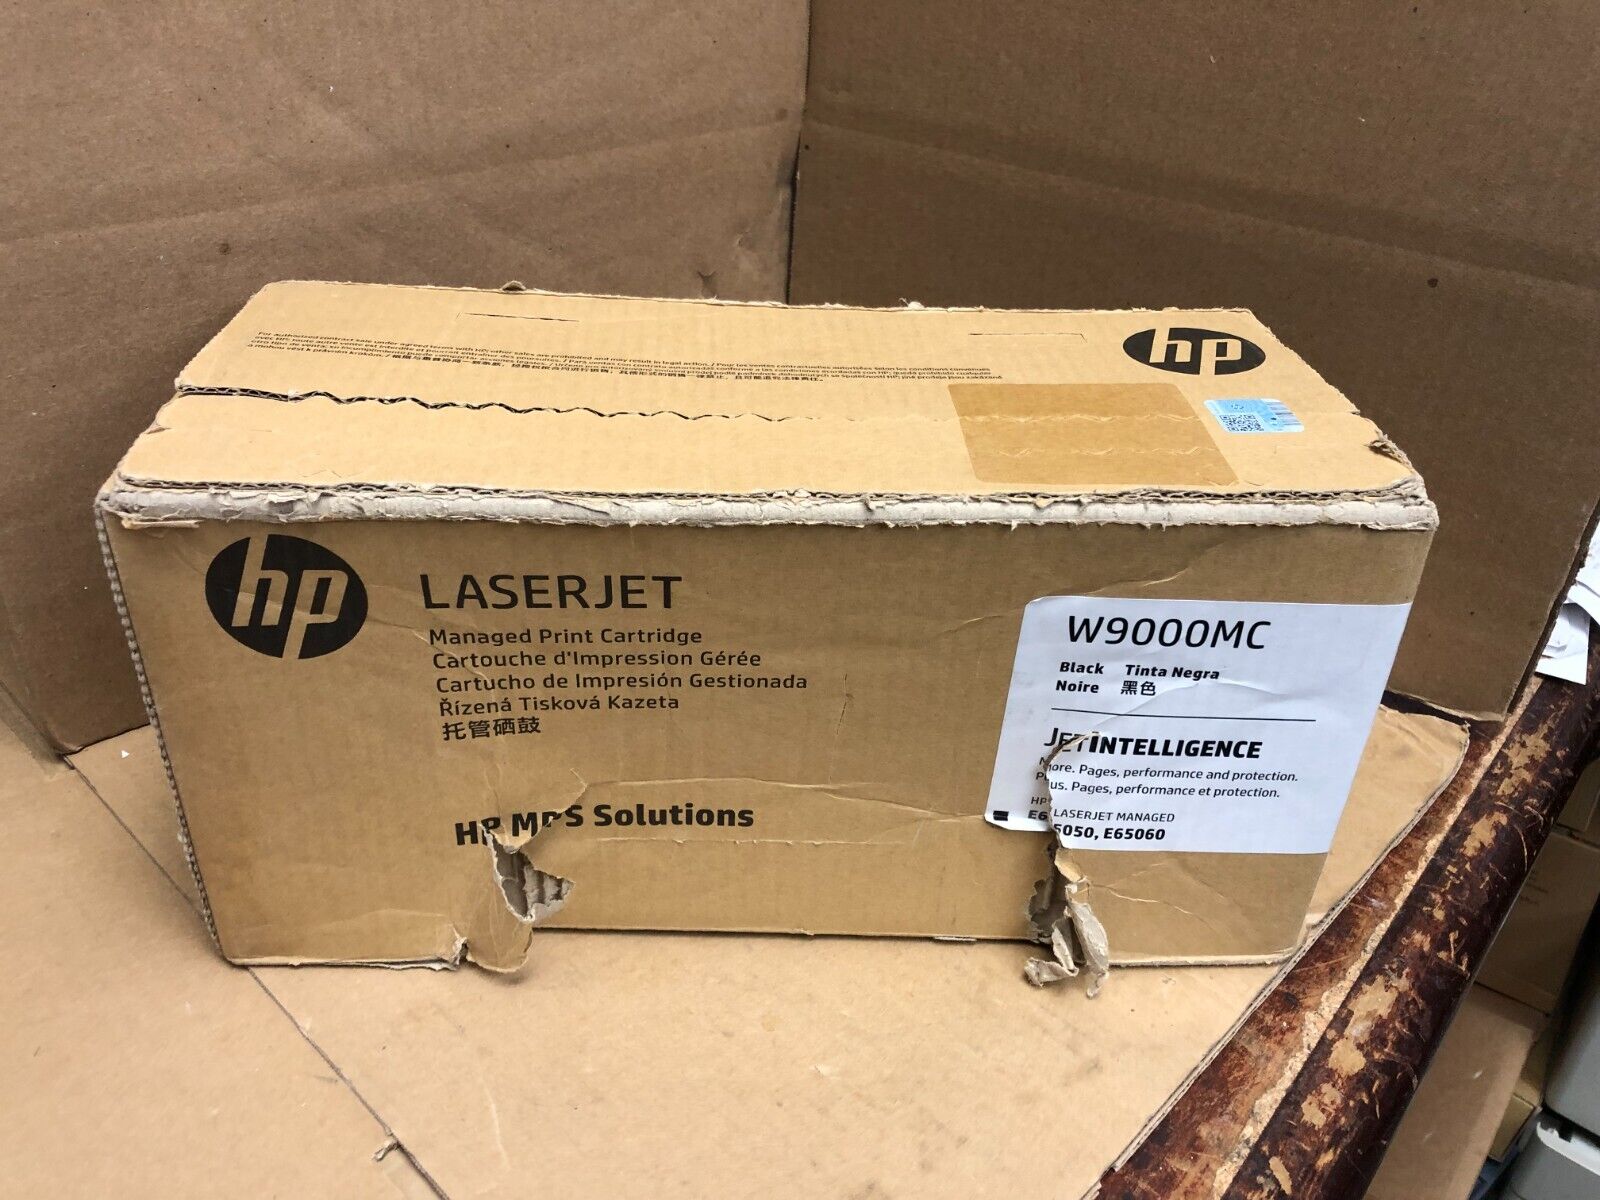 NEW SEALED BOX HP Laserjet W9000MC Managed Print Cartridge Black - 